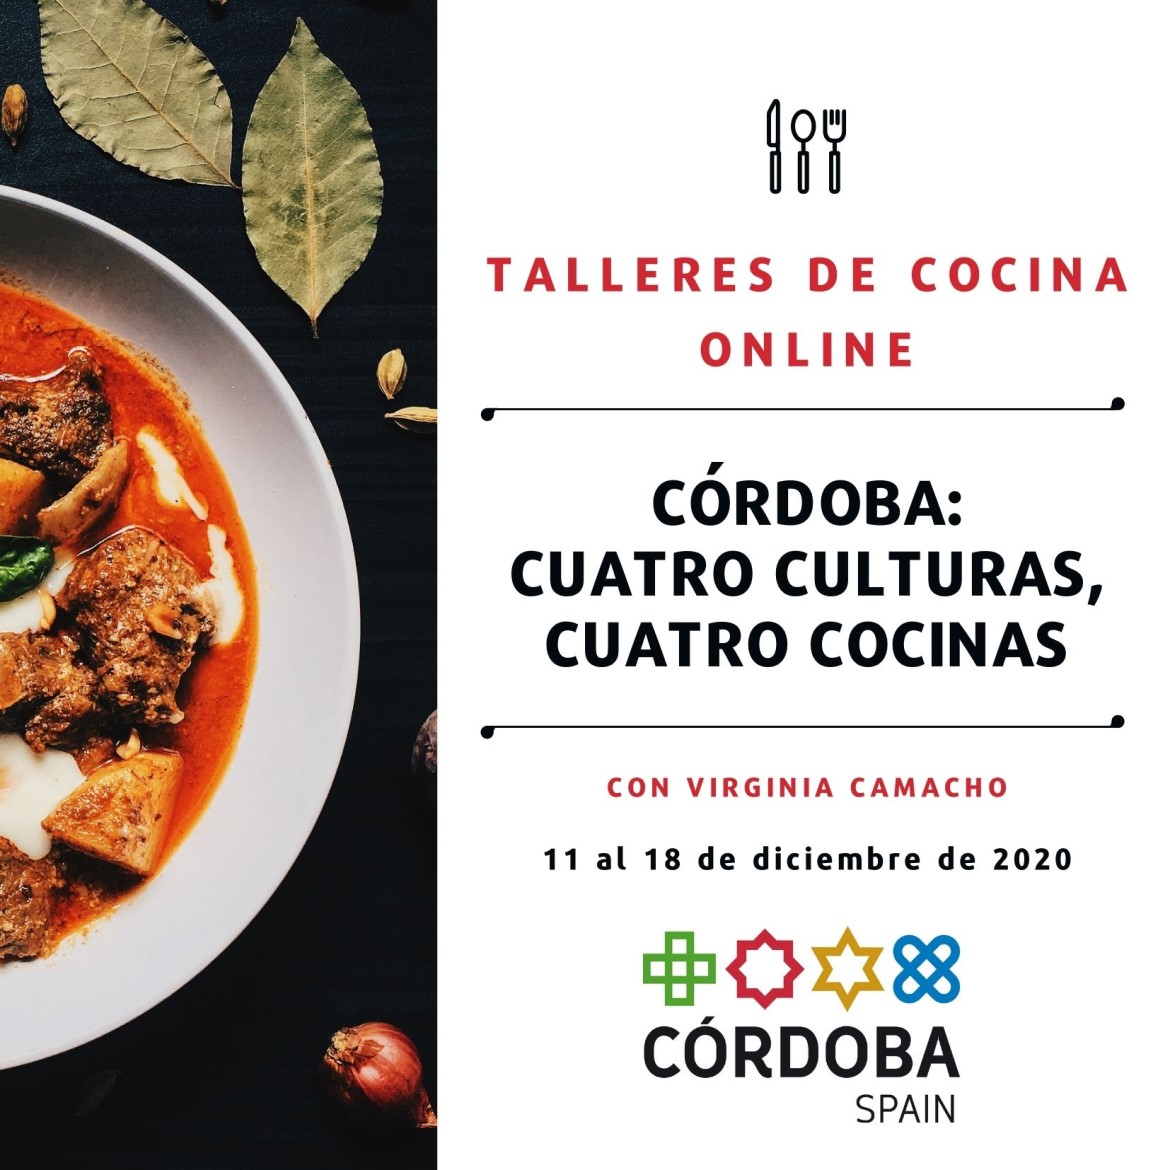 Talleres de cocina online - Córdoba: Cuatro Culturas, Cuatro Cocinas (España)